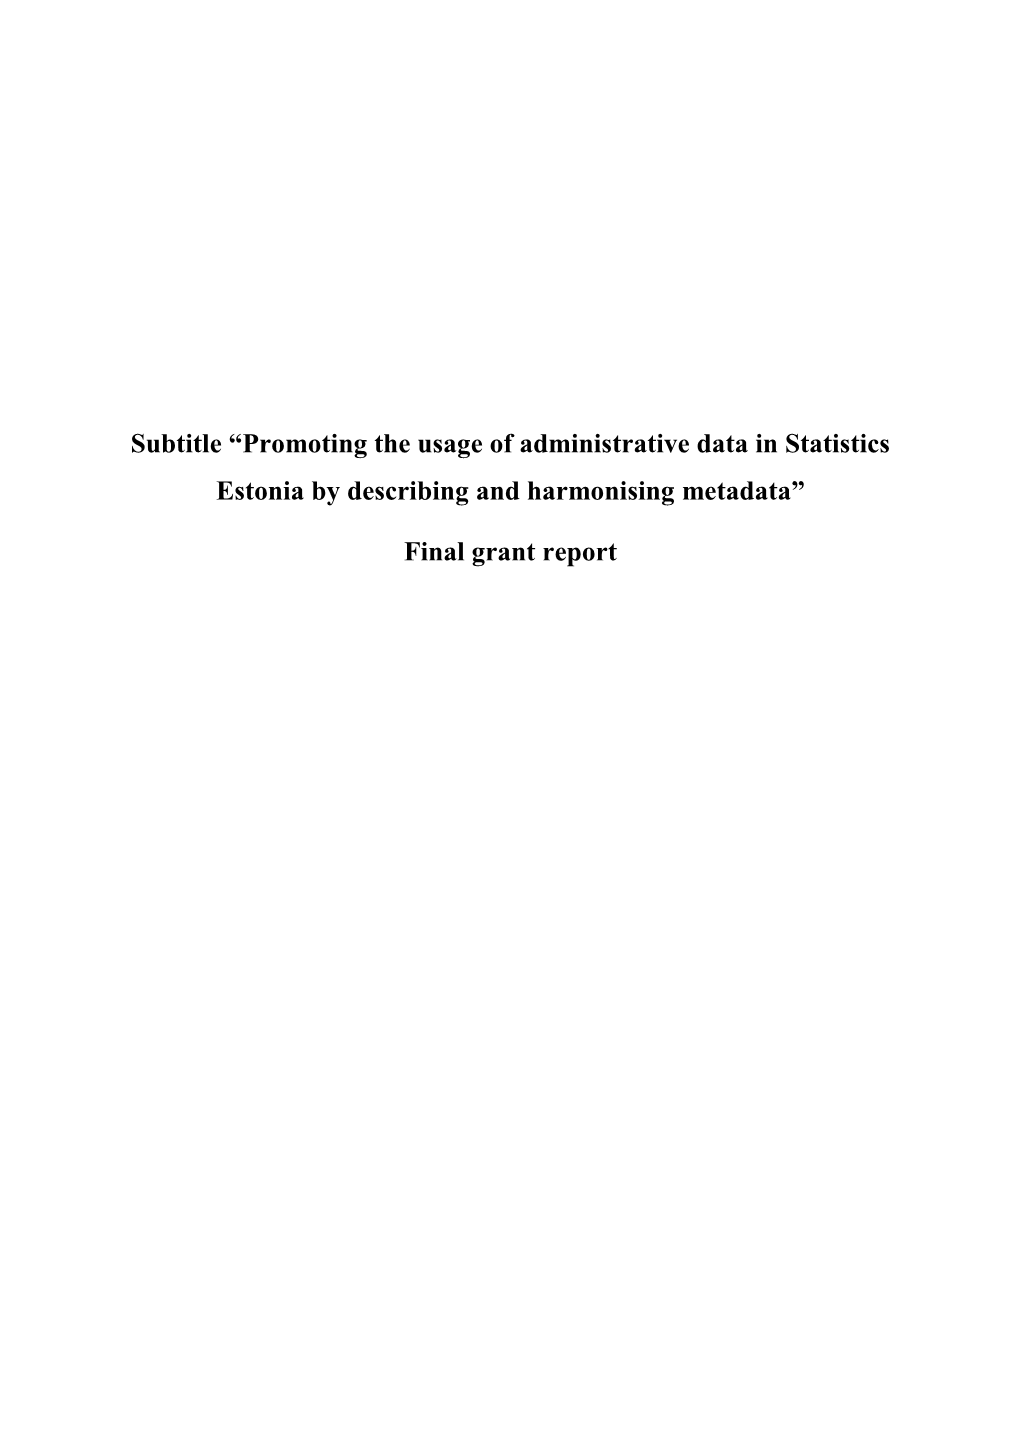 Promoting the Usage of Administrative Data in Statistics Estonia by Describing and Harmonising Metadata”